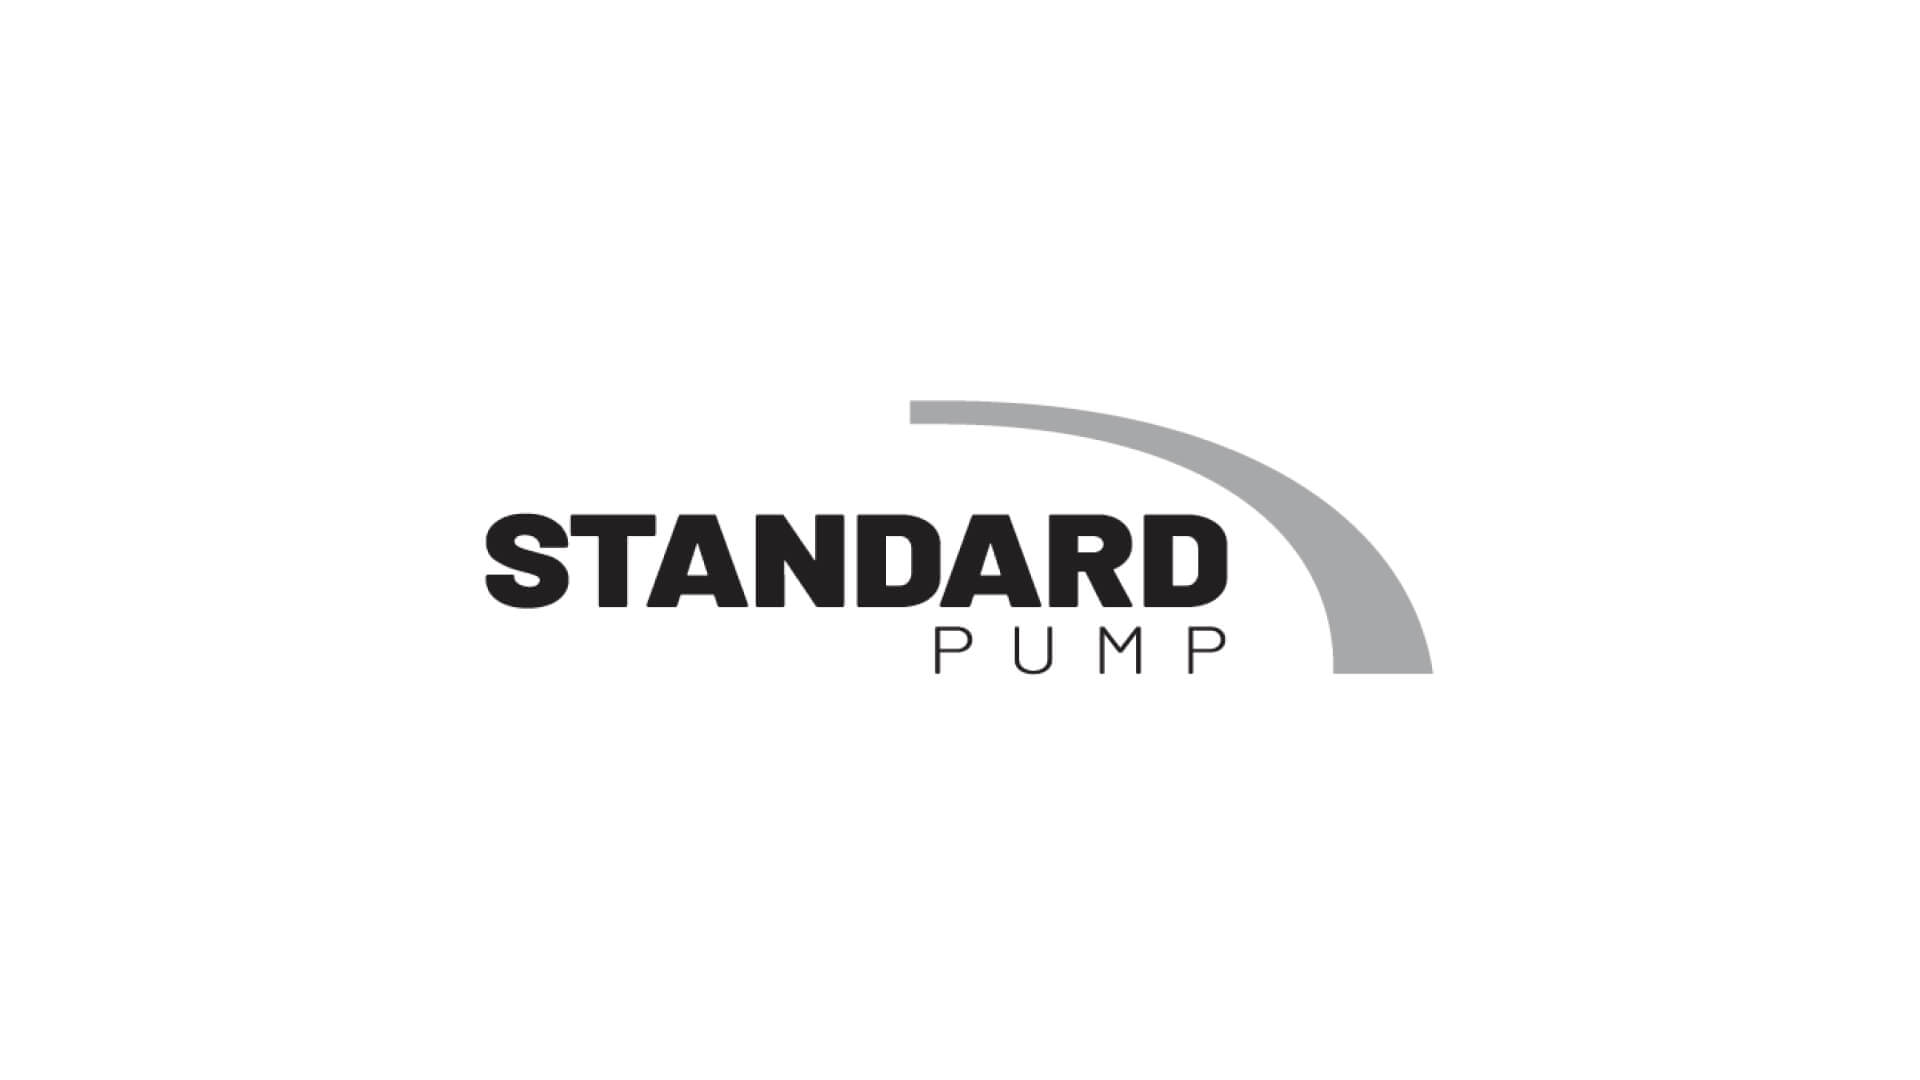 Standard Pump logo in color